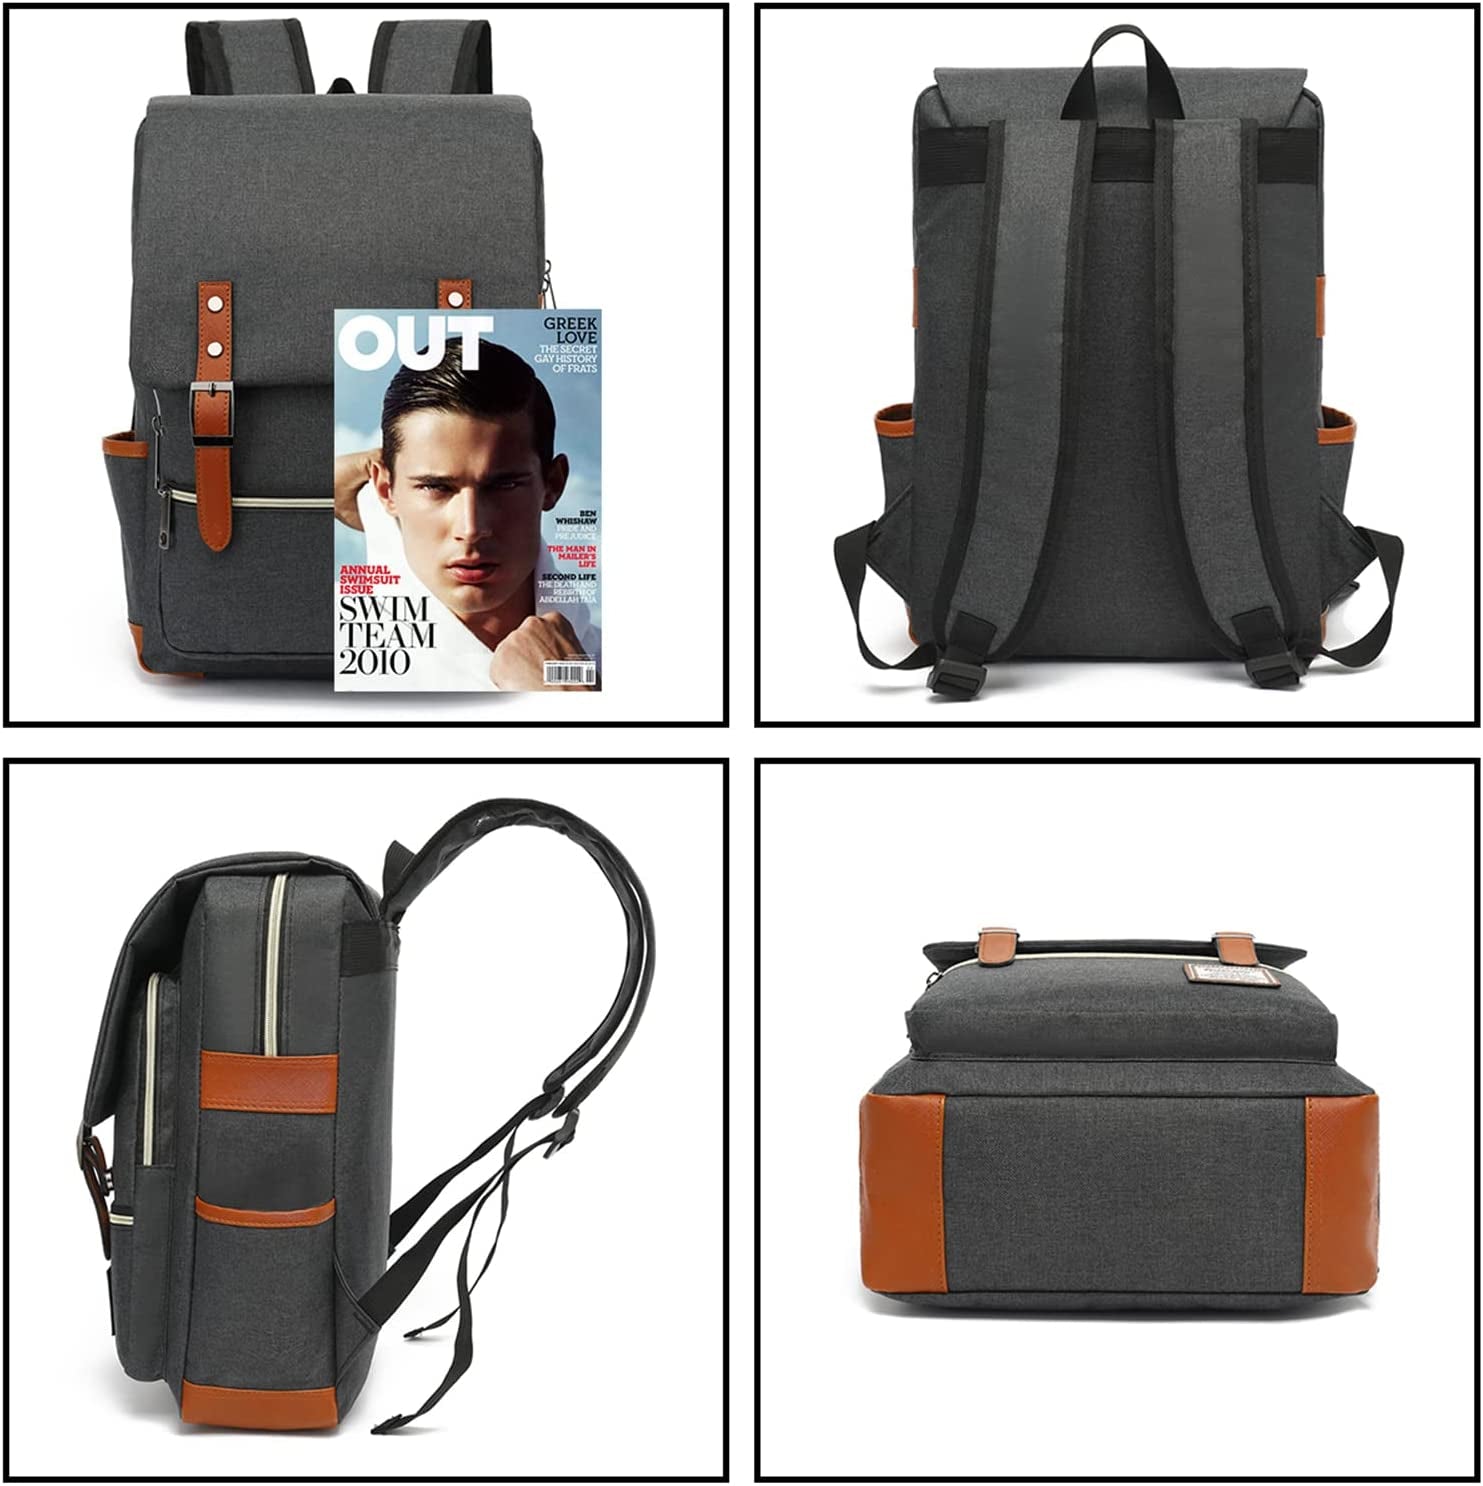 Slim Business Laptop Backpack Casual Daypacks College Shoulder Bag for Men Women, Tear Resistant Unique Travelling Backpack Fits up to 15.6 Inch Laptop in ‎Charcoal Black